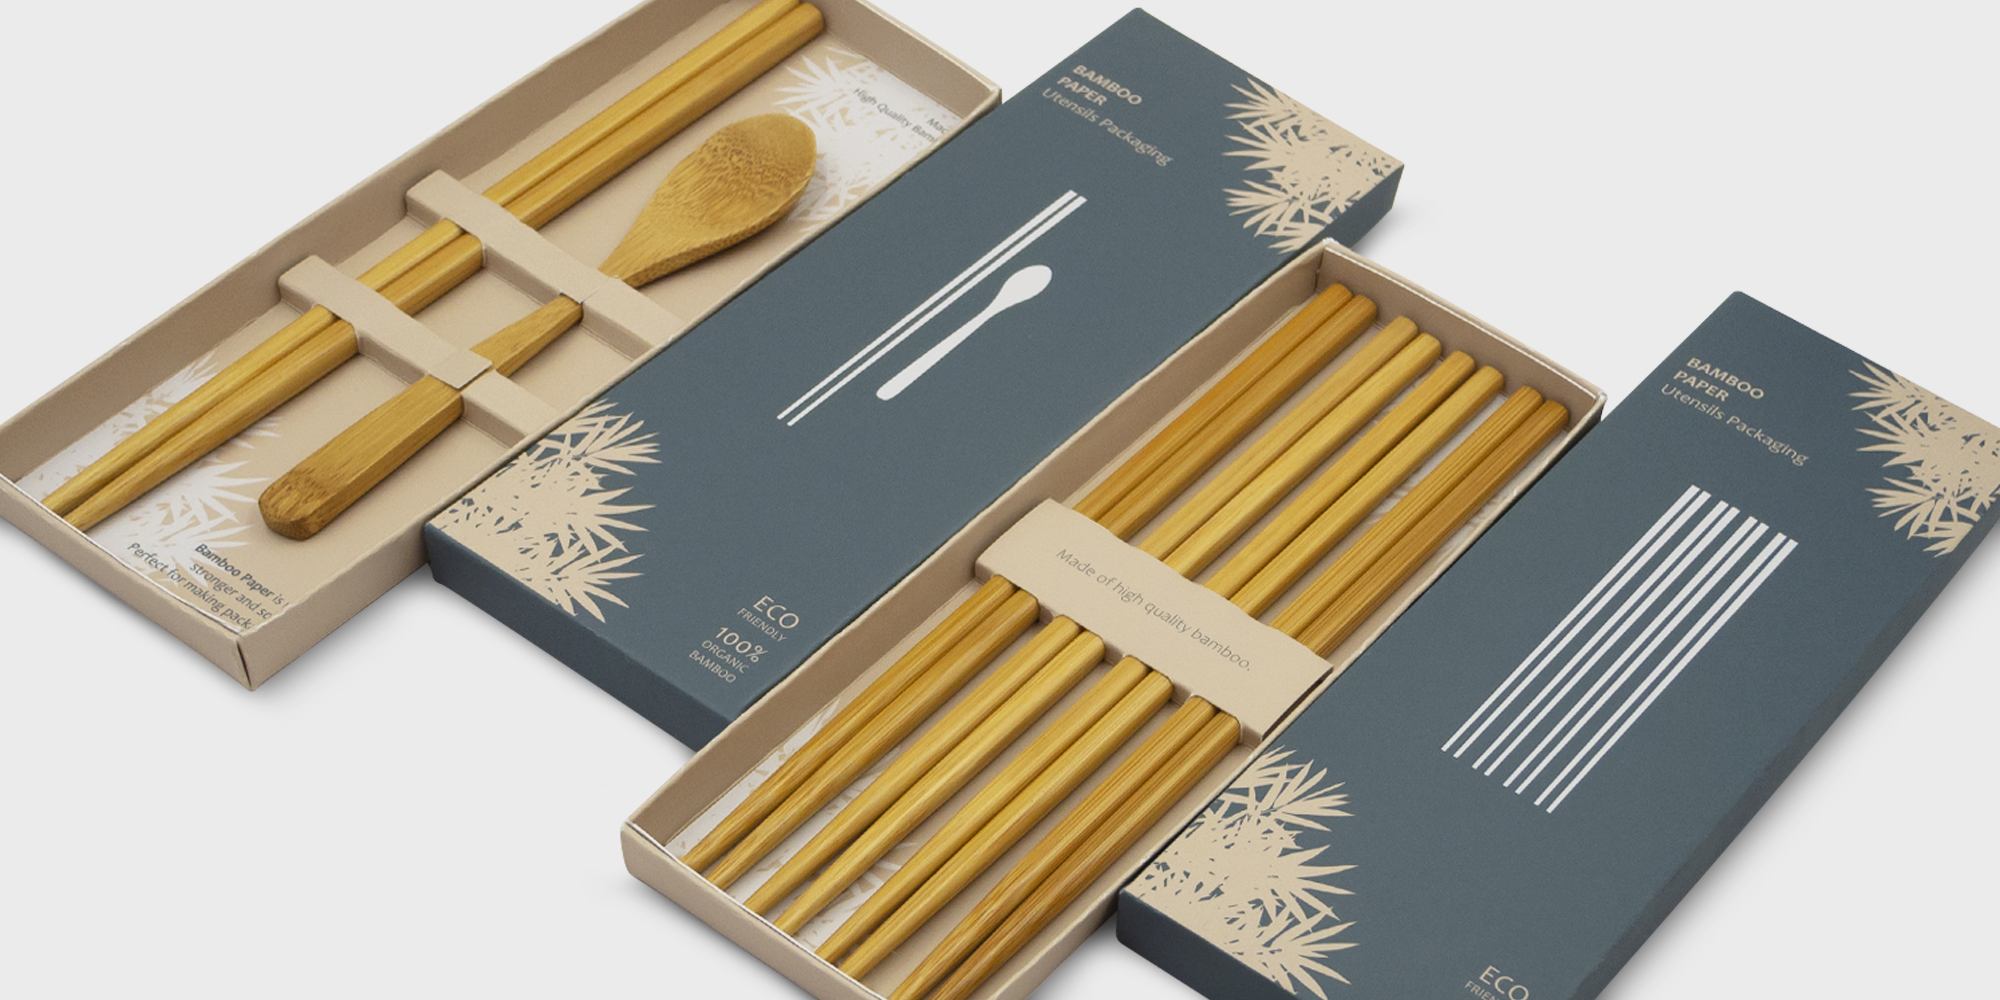 Utensils Bamboo Paper Packaging